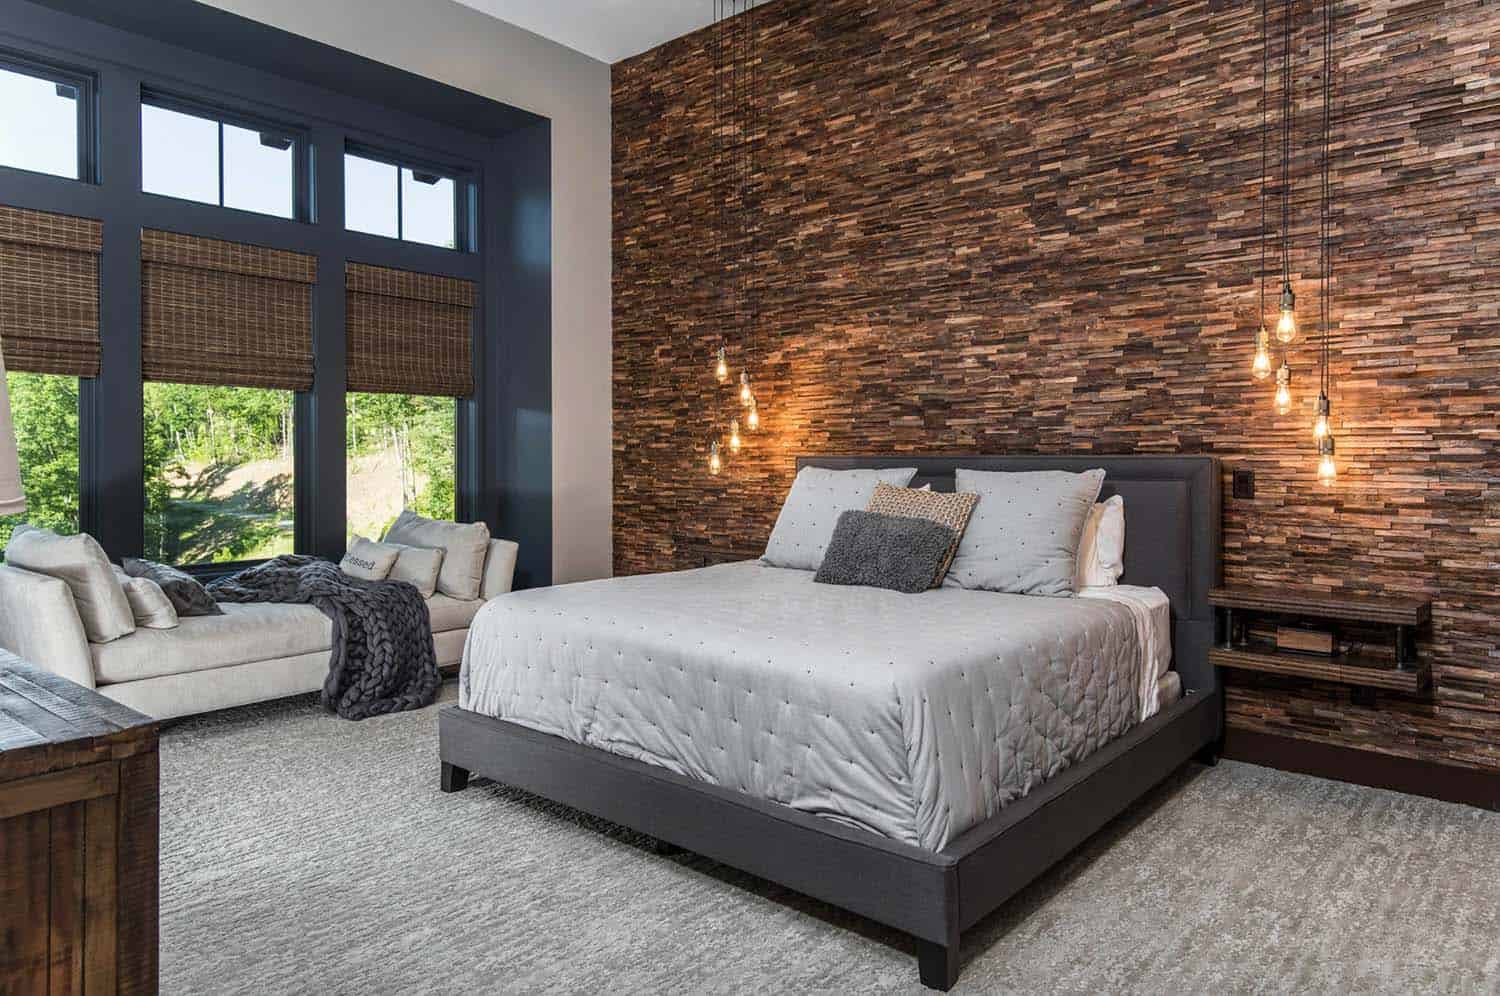 20 Serene And Elegant Master Bedroom Decorating Ideas,Living Room Decorating On A Budget